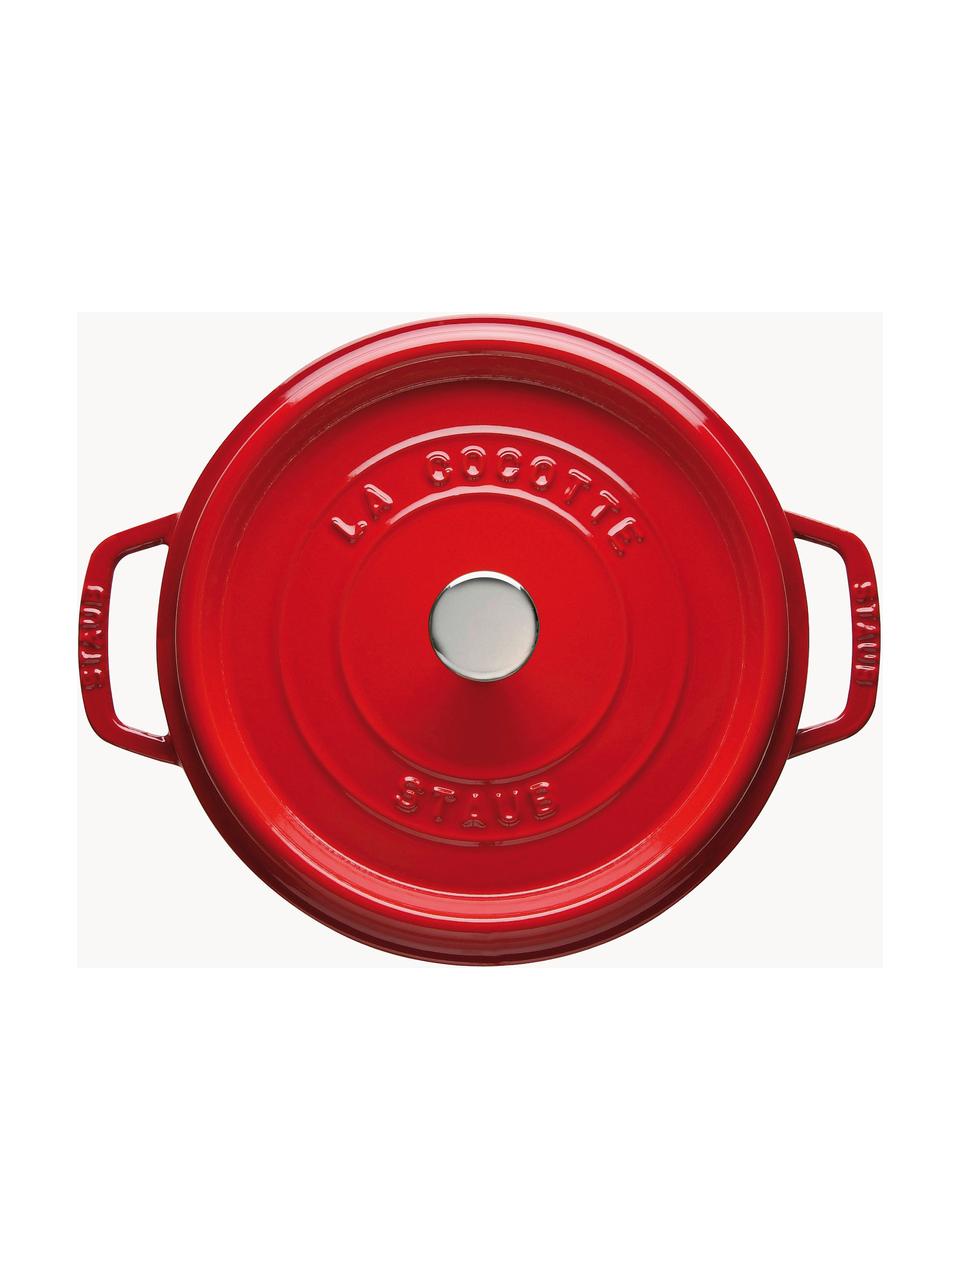 Cocotte redonda de hierro fundido La Cocotte, Hierro fundido esmaltado, Rojo, plateado, Ø 24 cm x Al 15 cm, 3.8 L